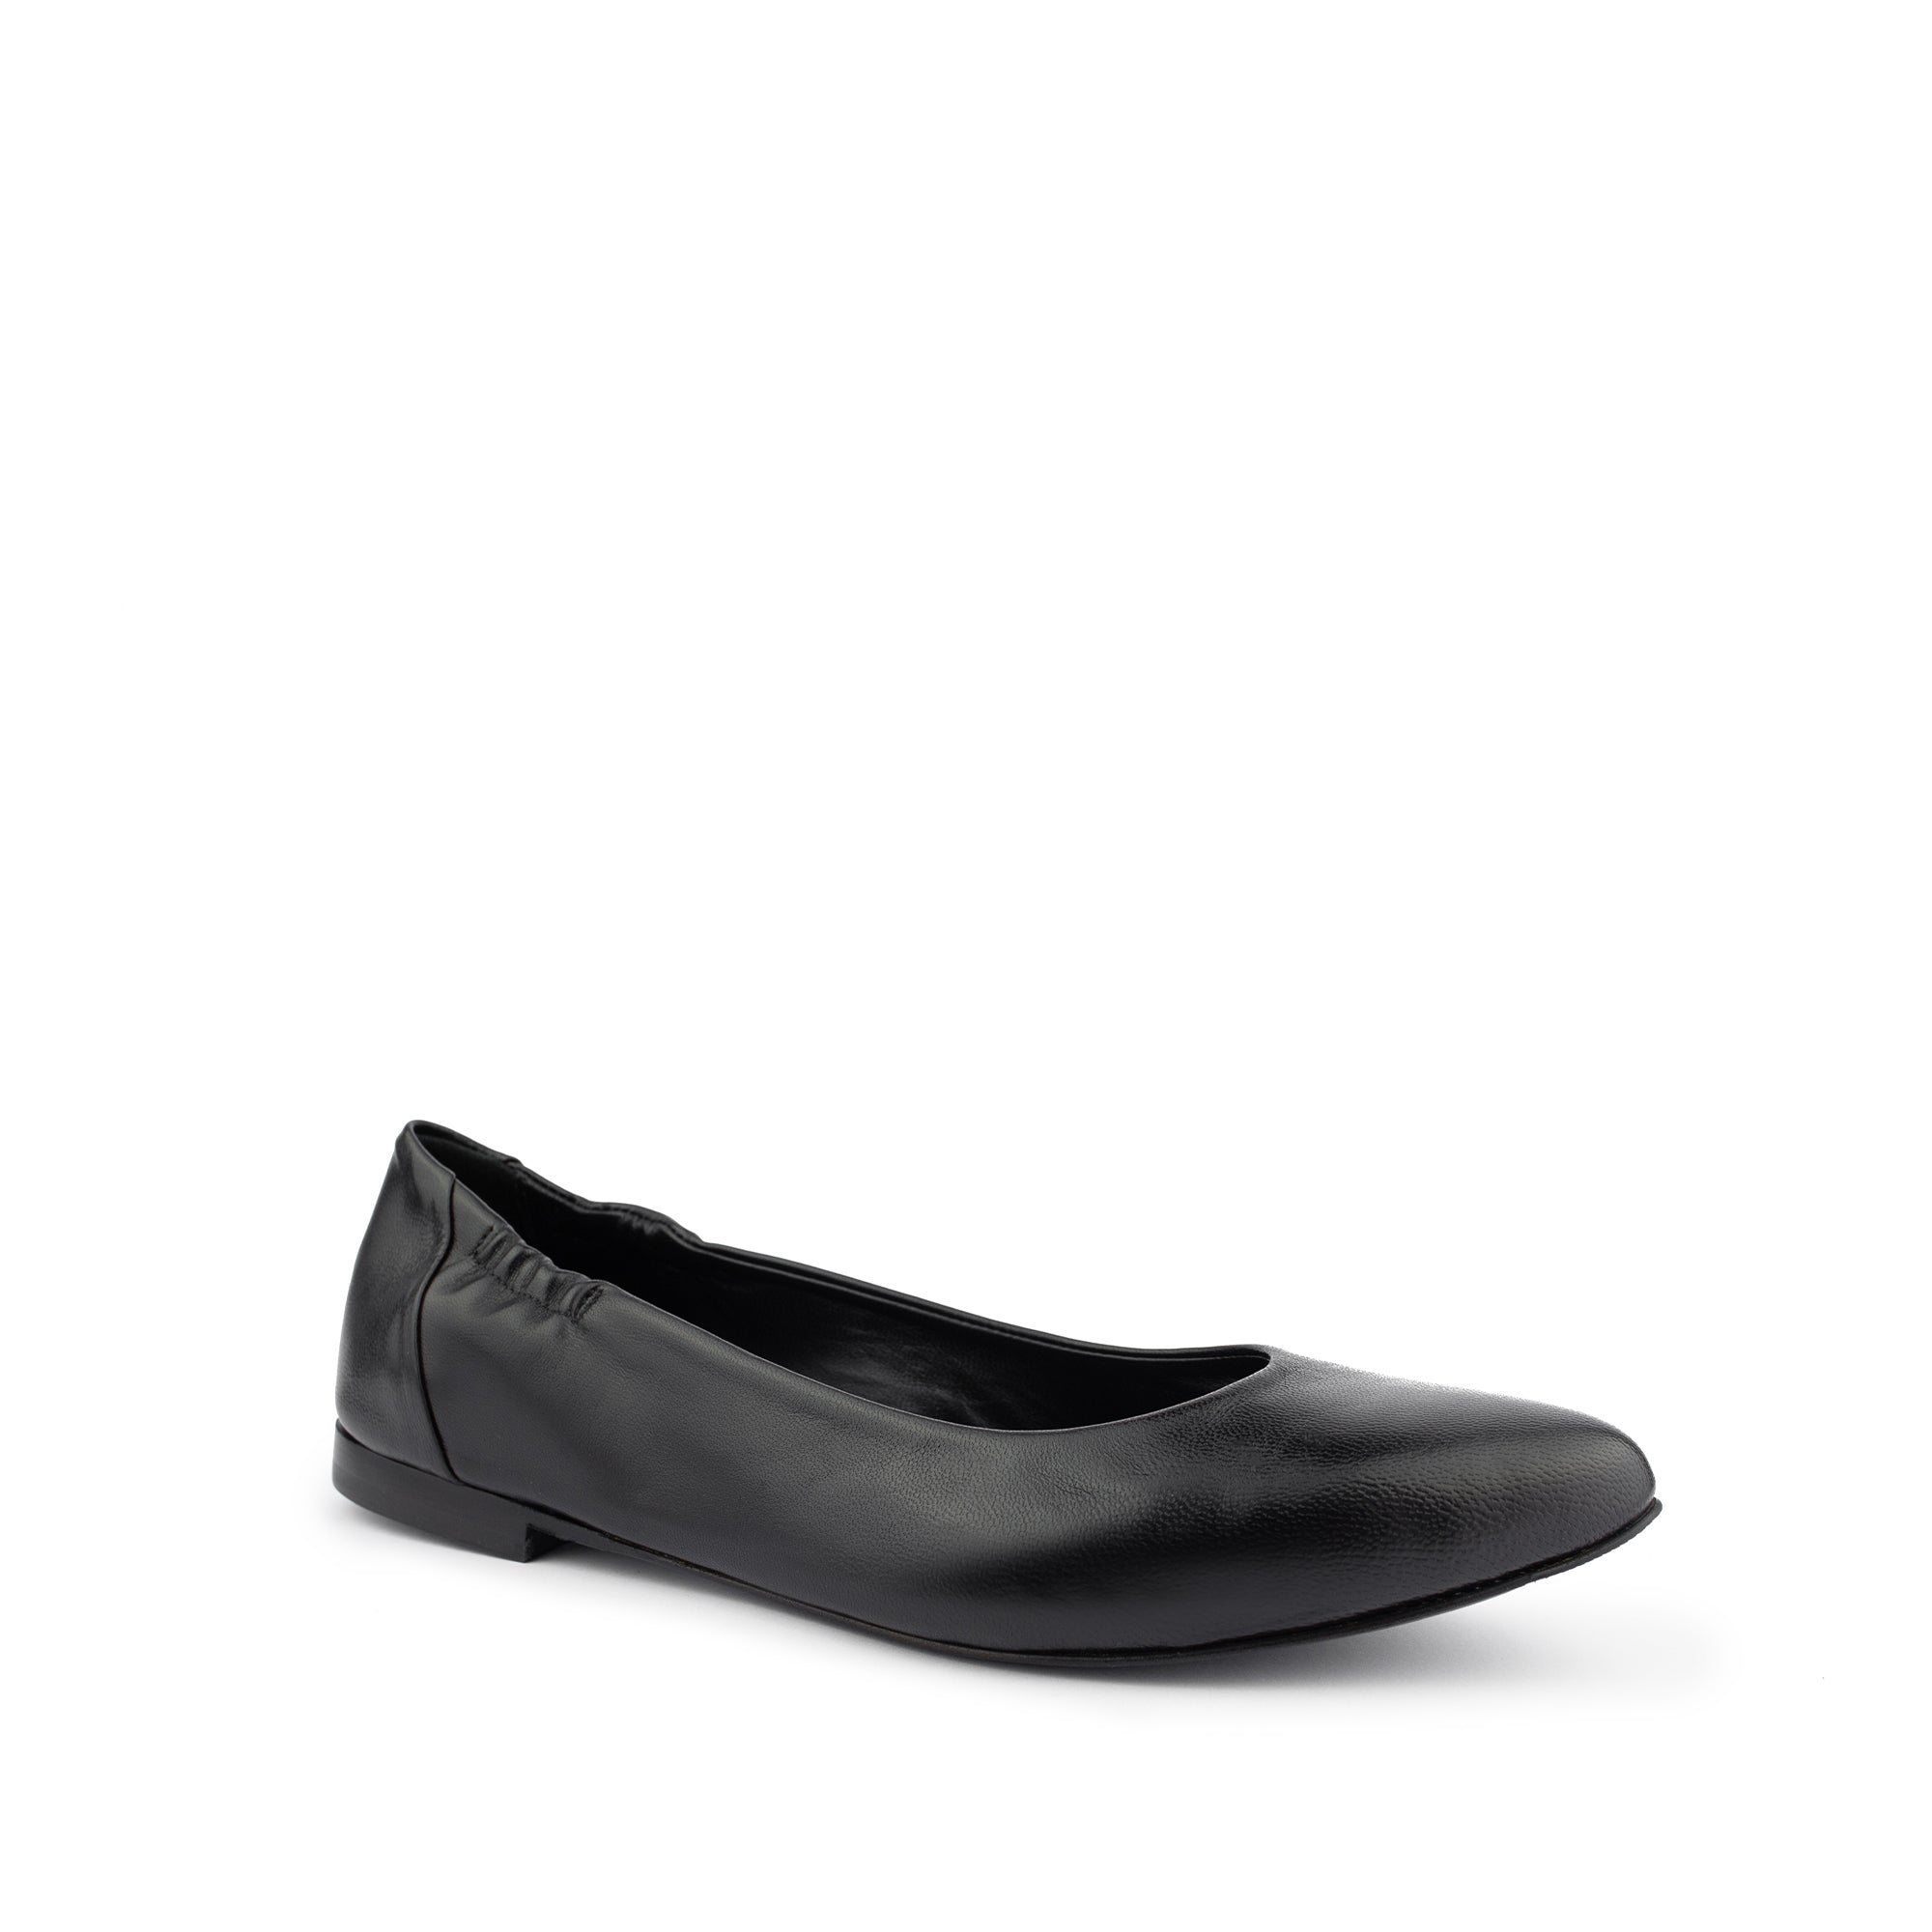 Mara Flats | Women’s Ballet Flats | Italian Leather Shoes - Italeau Nuova